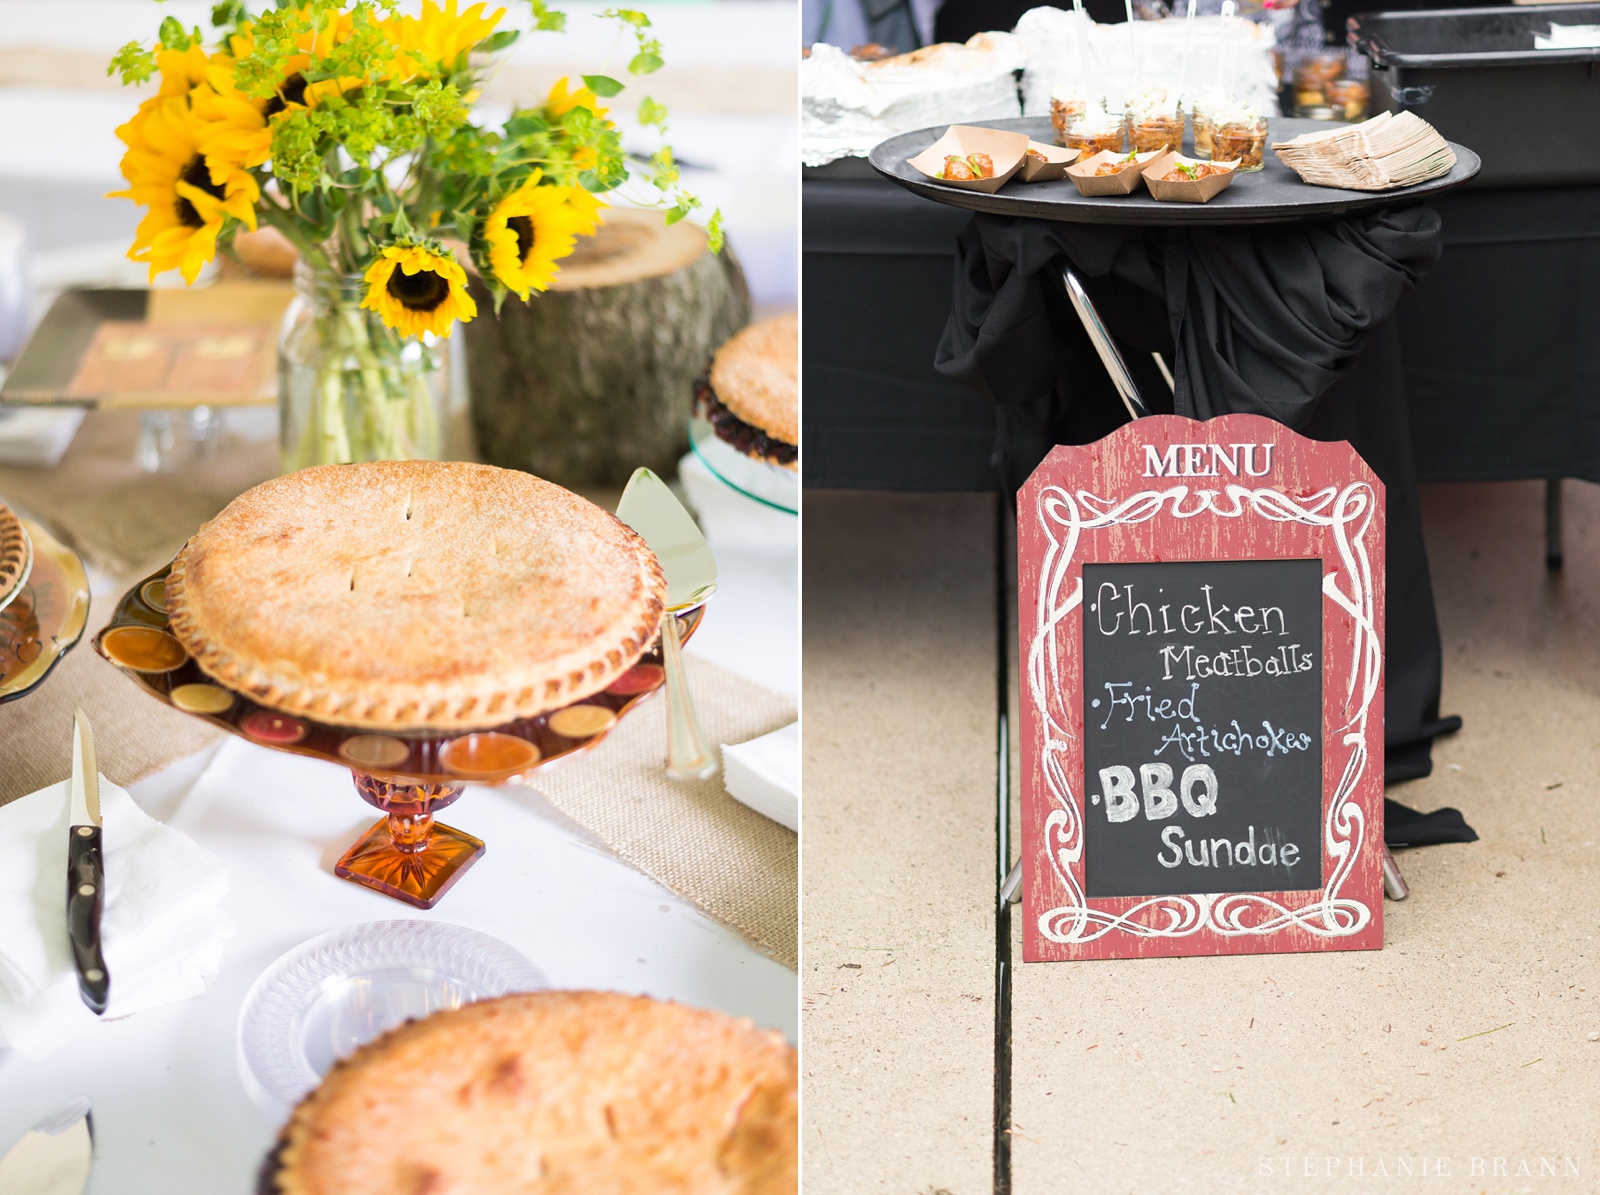 pies-at-a-wedding-reception